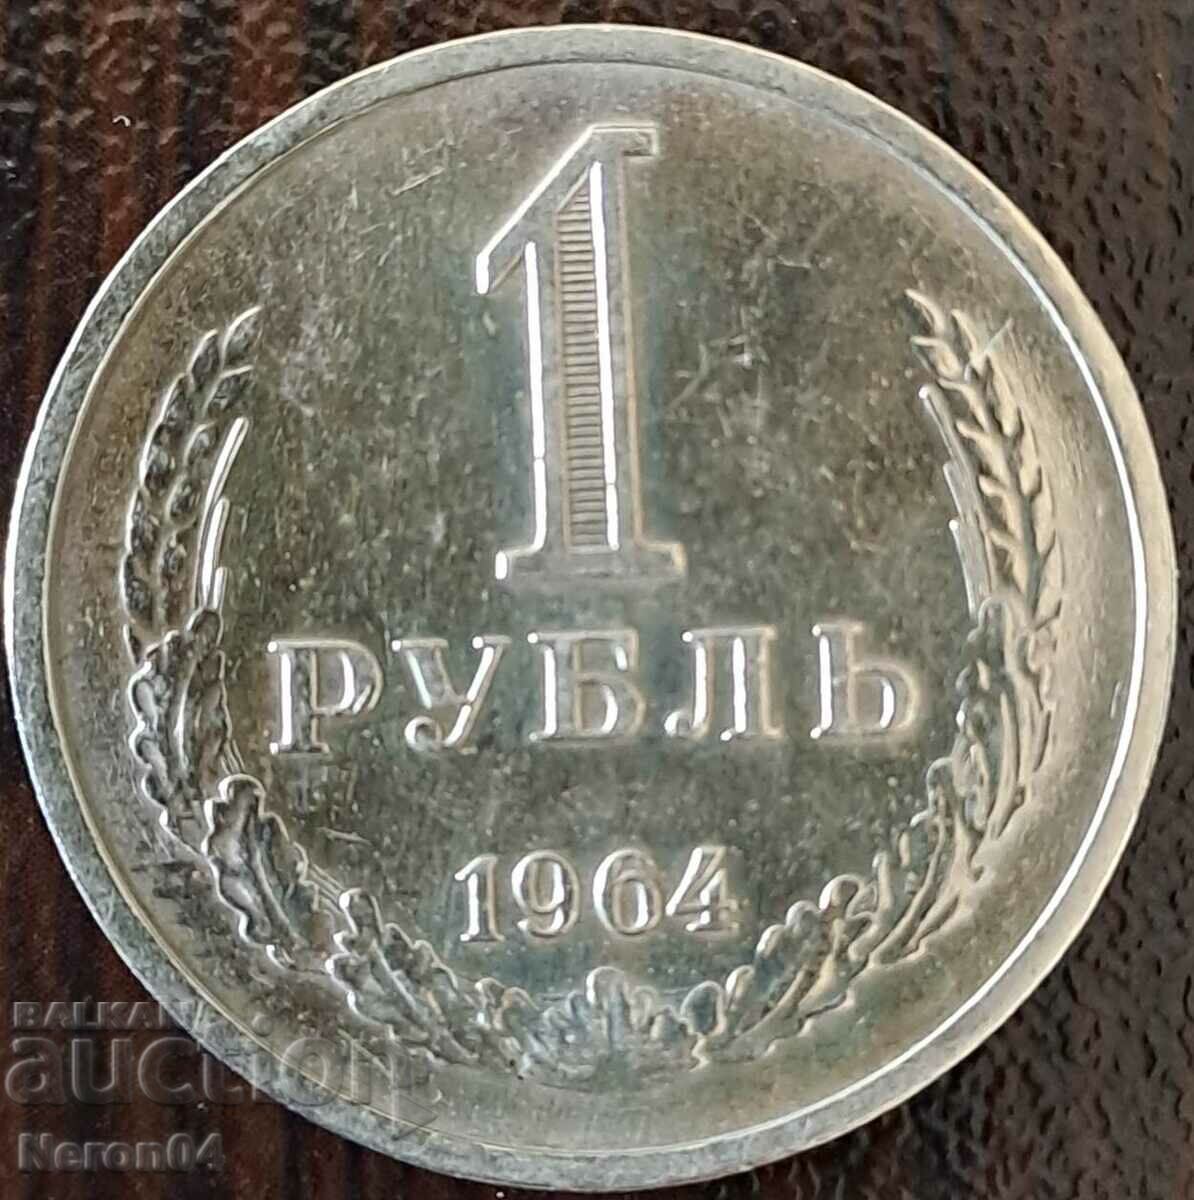 1 ruble 1964, USSR